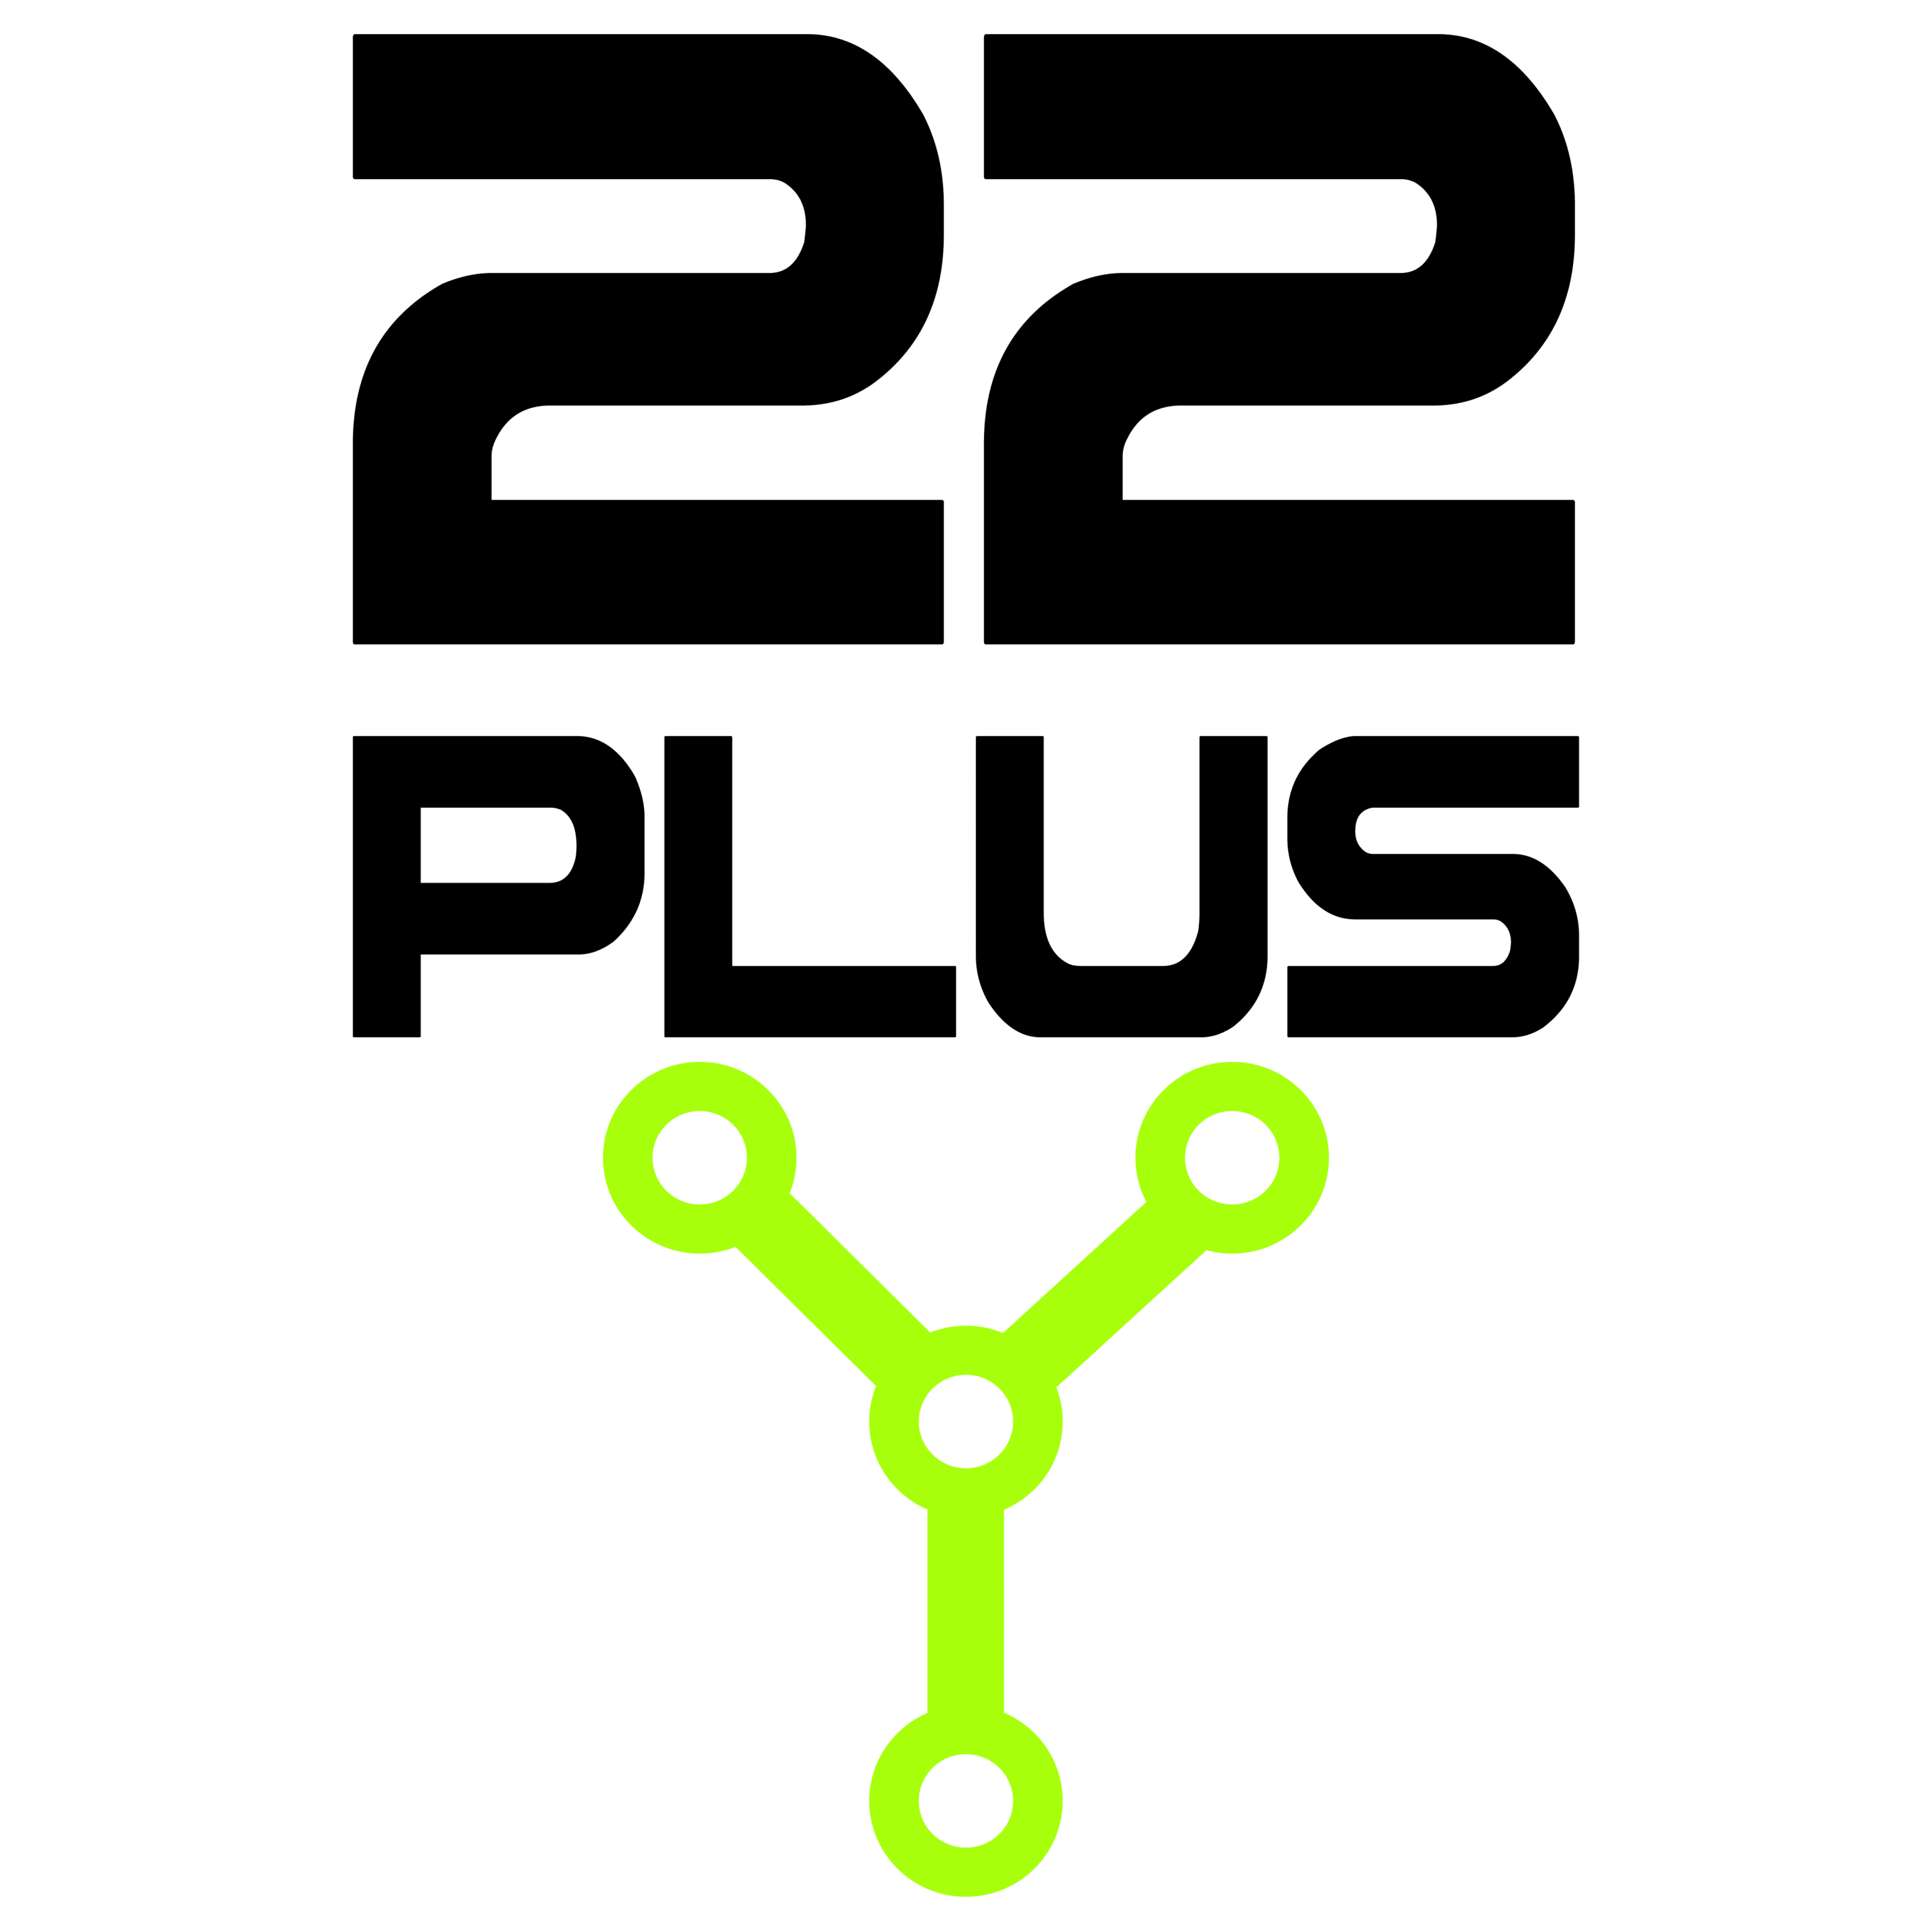 22PlusY logo - square